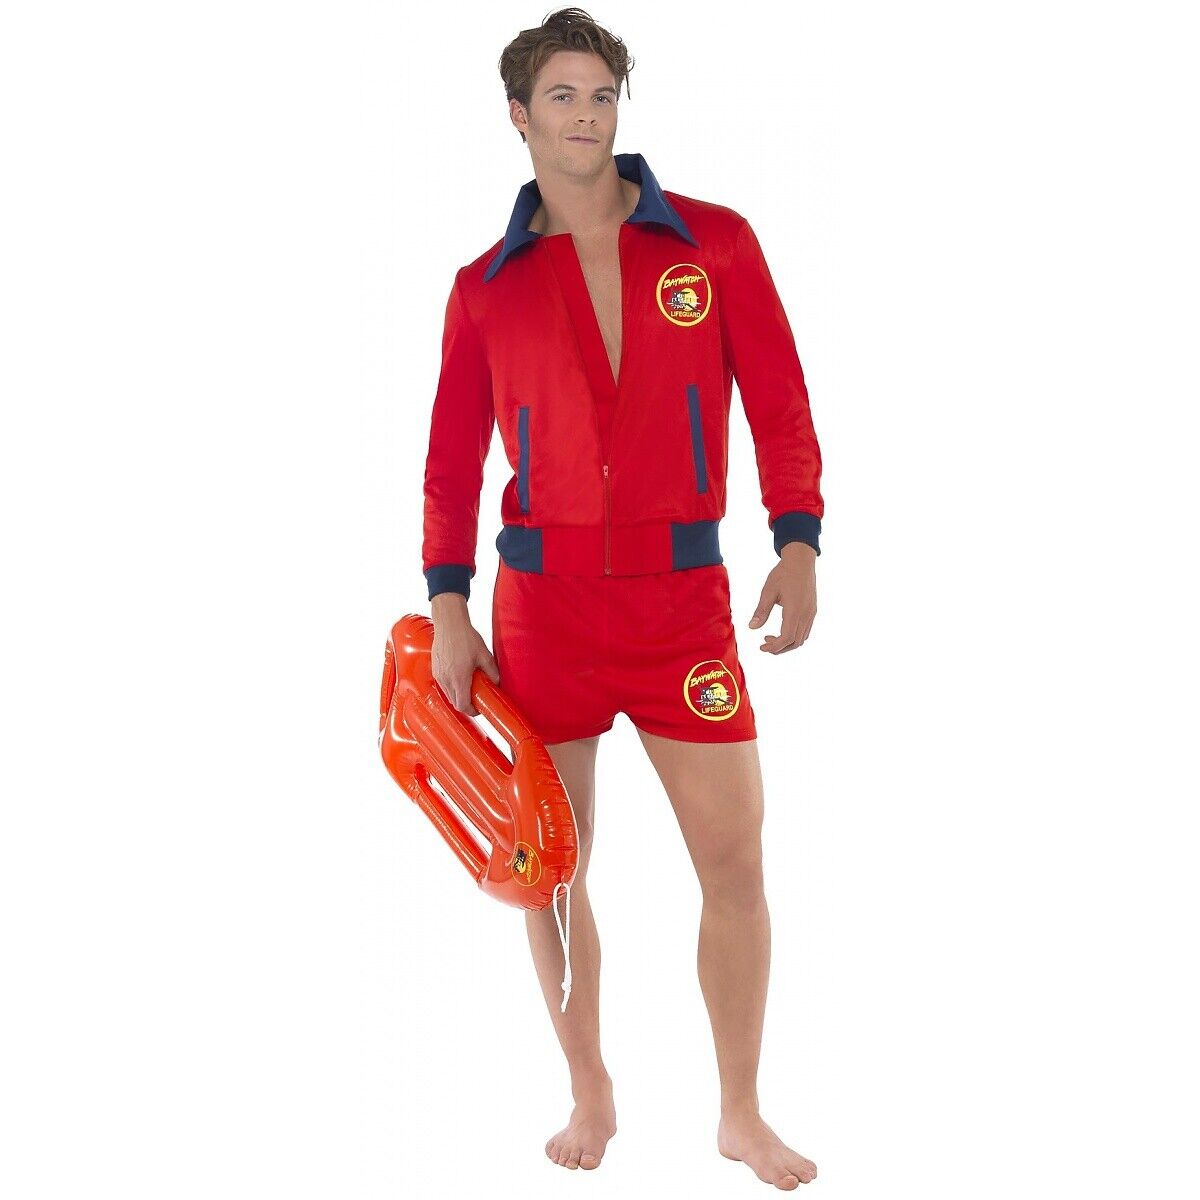 Baywatch Lifeguard Costume Costume Baywatch Halloween Fancy Dress